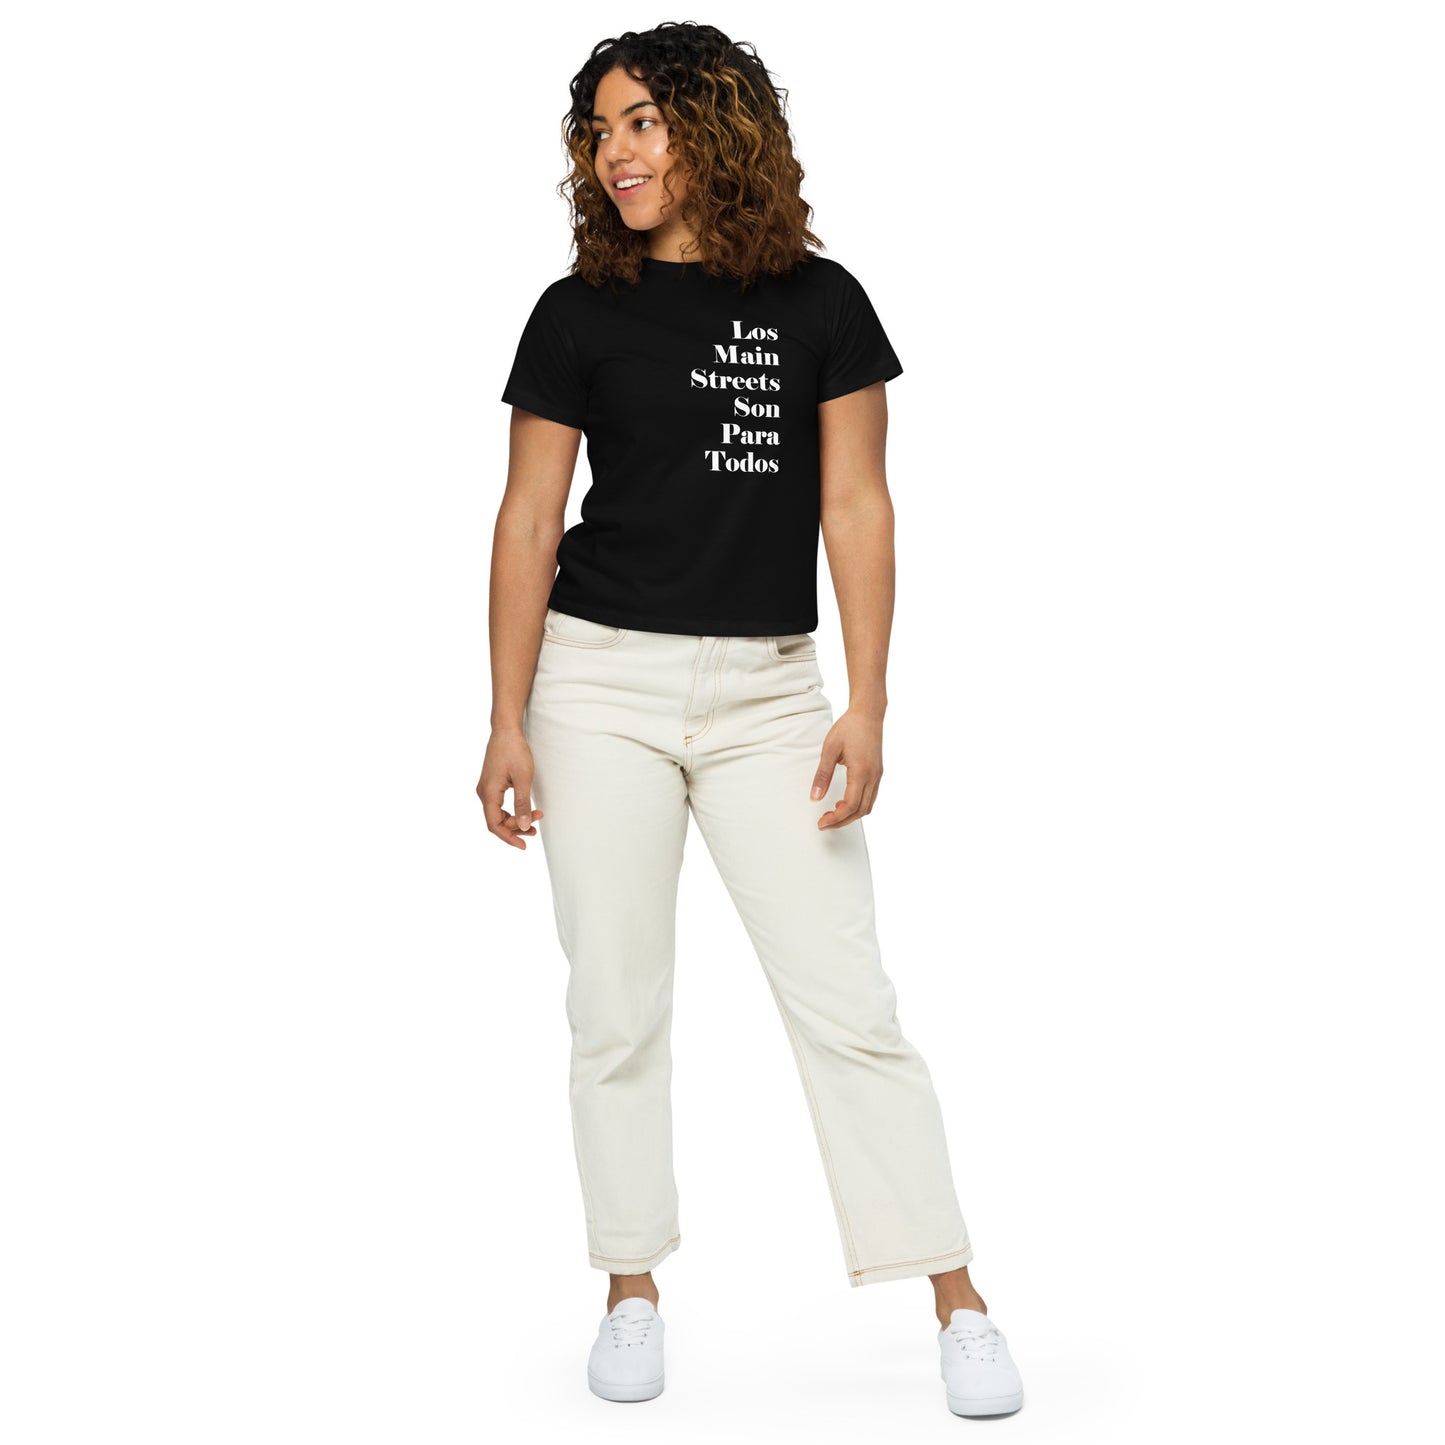 Los Main Streets Son Para Todos (White) Women’s High-Waisted T-shirt